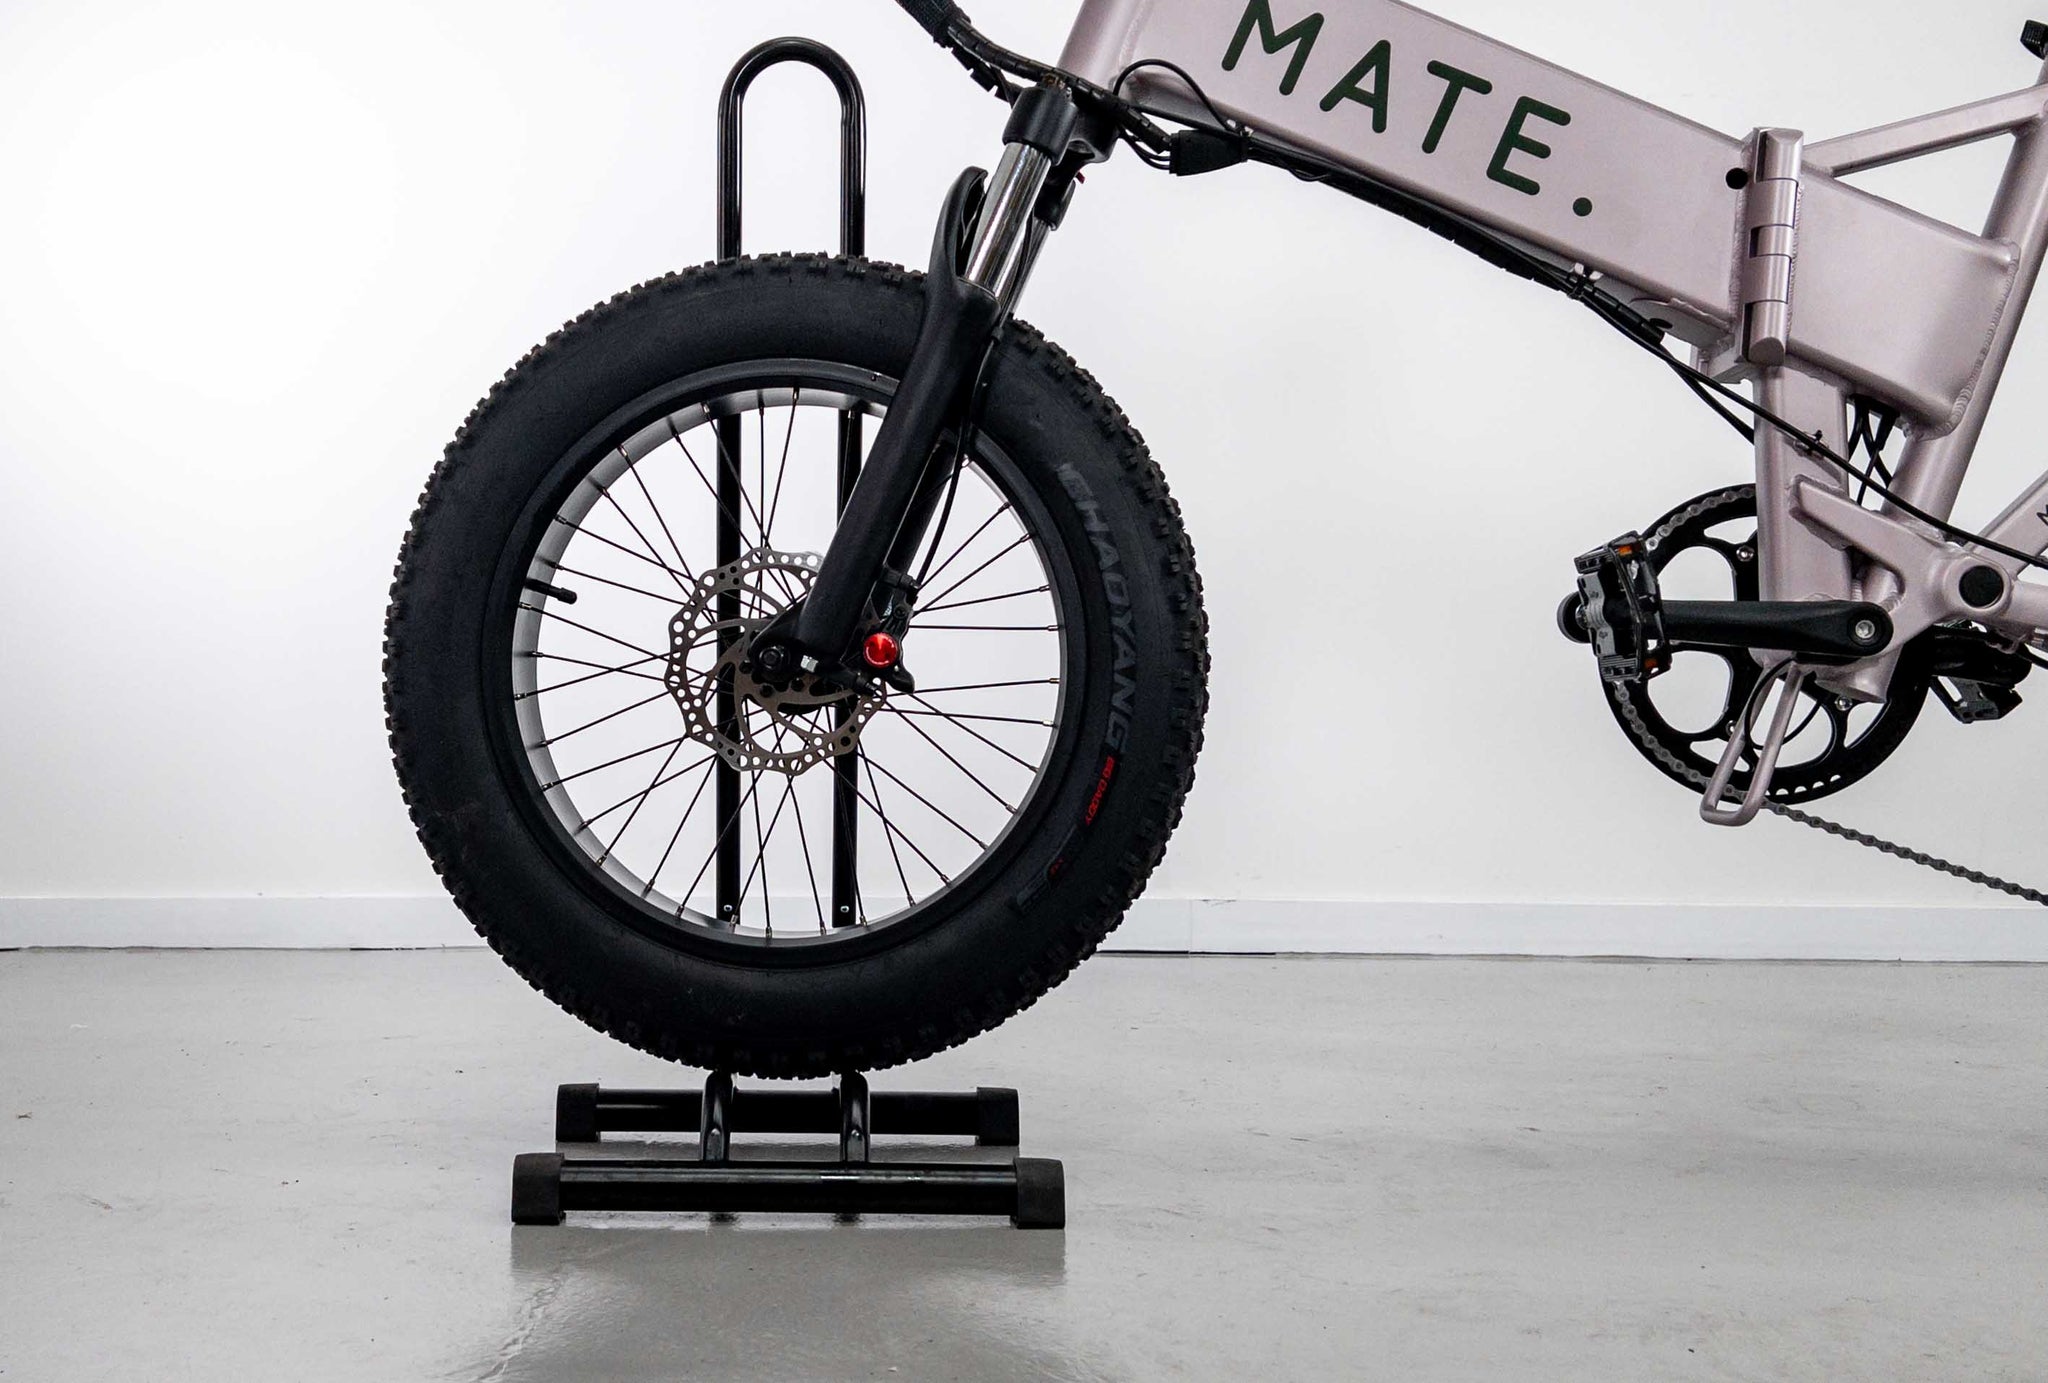 Mate X 250w Electric Hybrid Bike - Sterling Moss - One Size